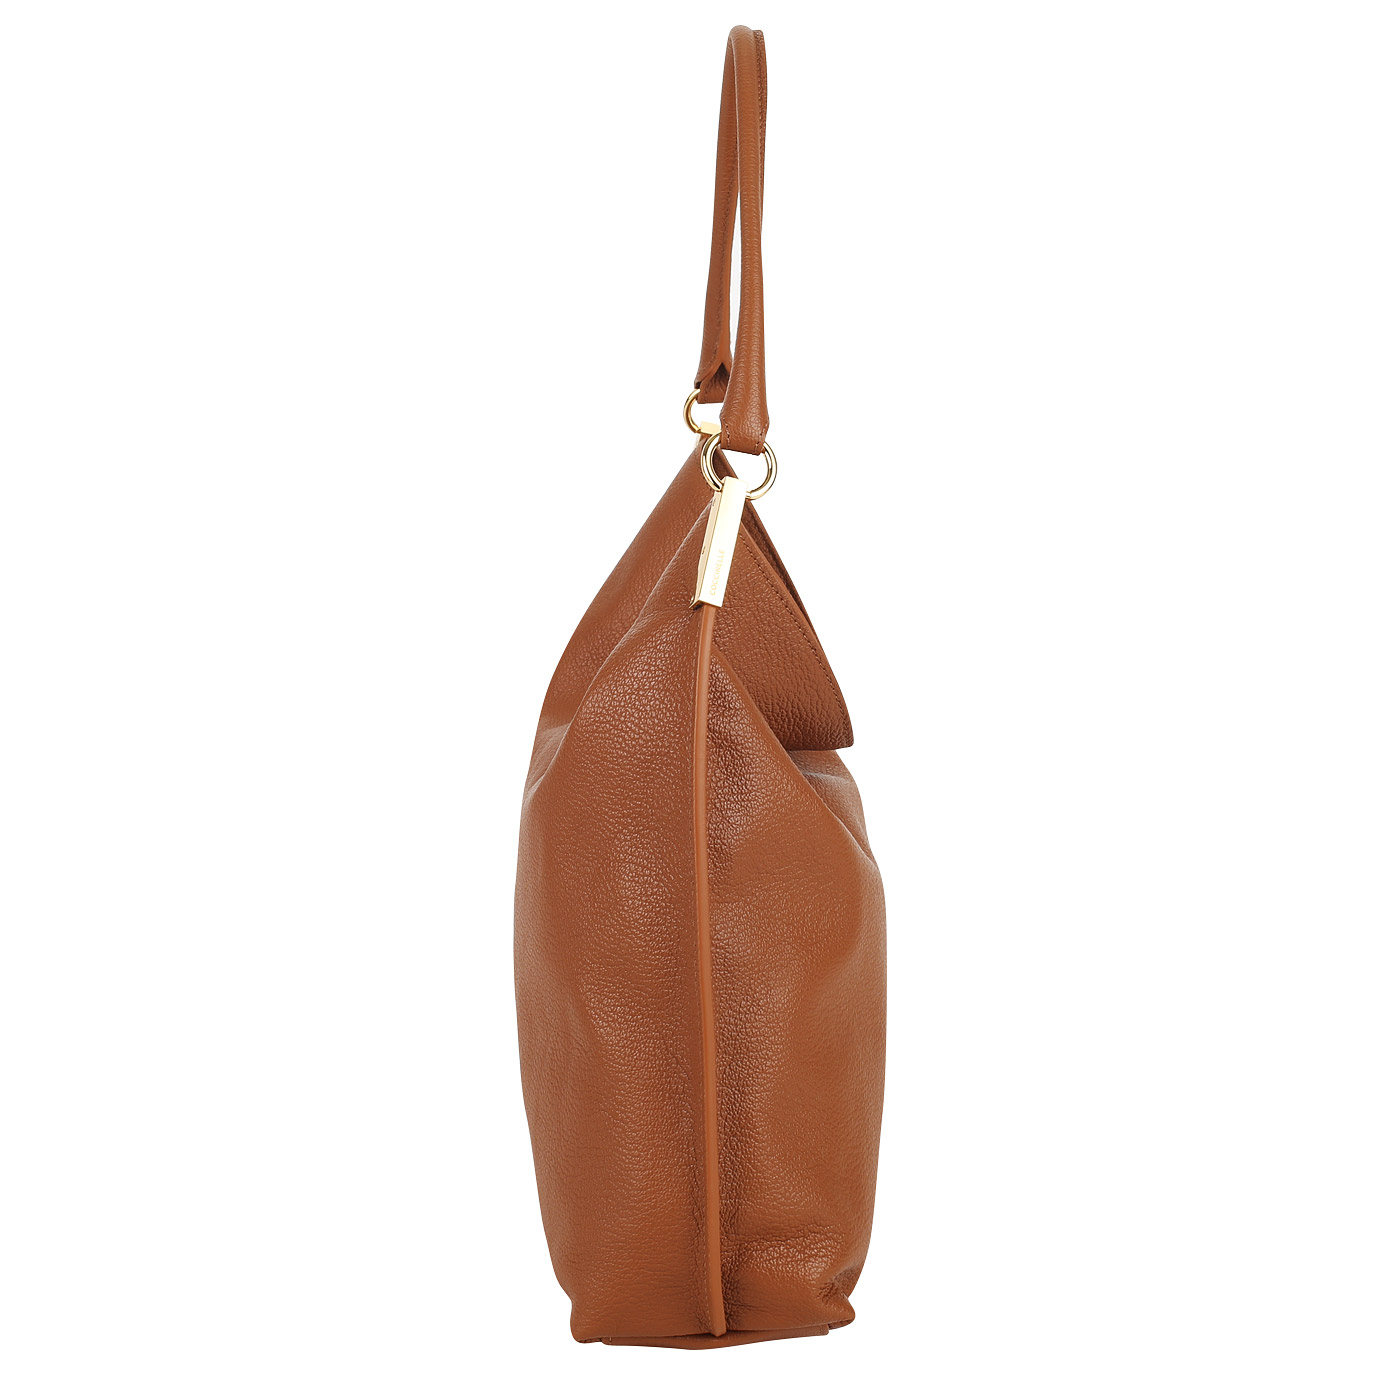 Дамская сумка с плечевым ремешком Coccinelle Estelle